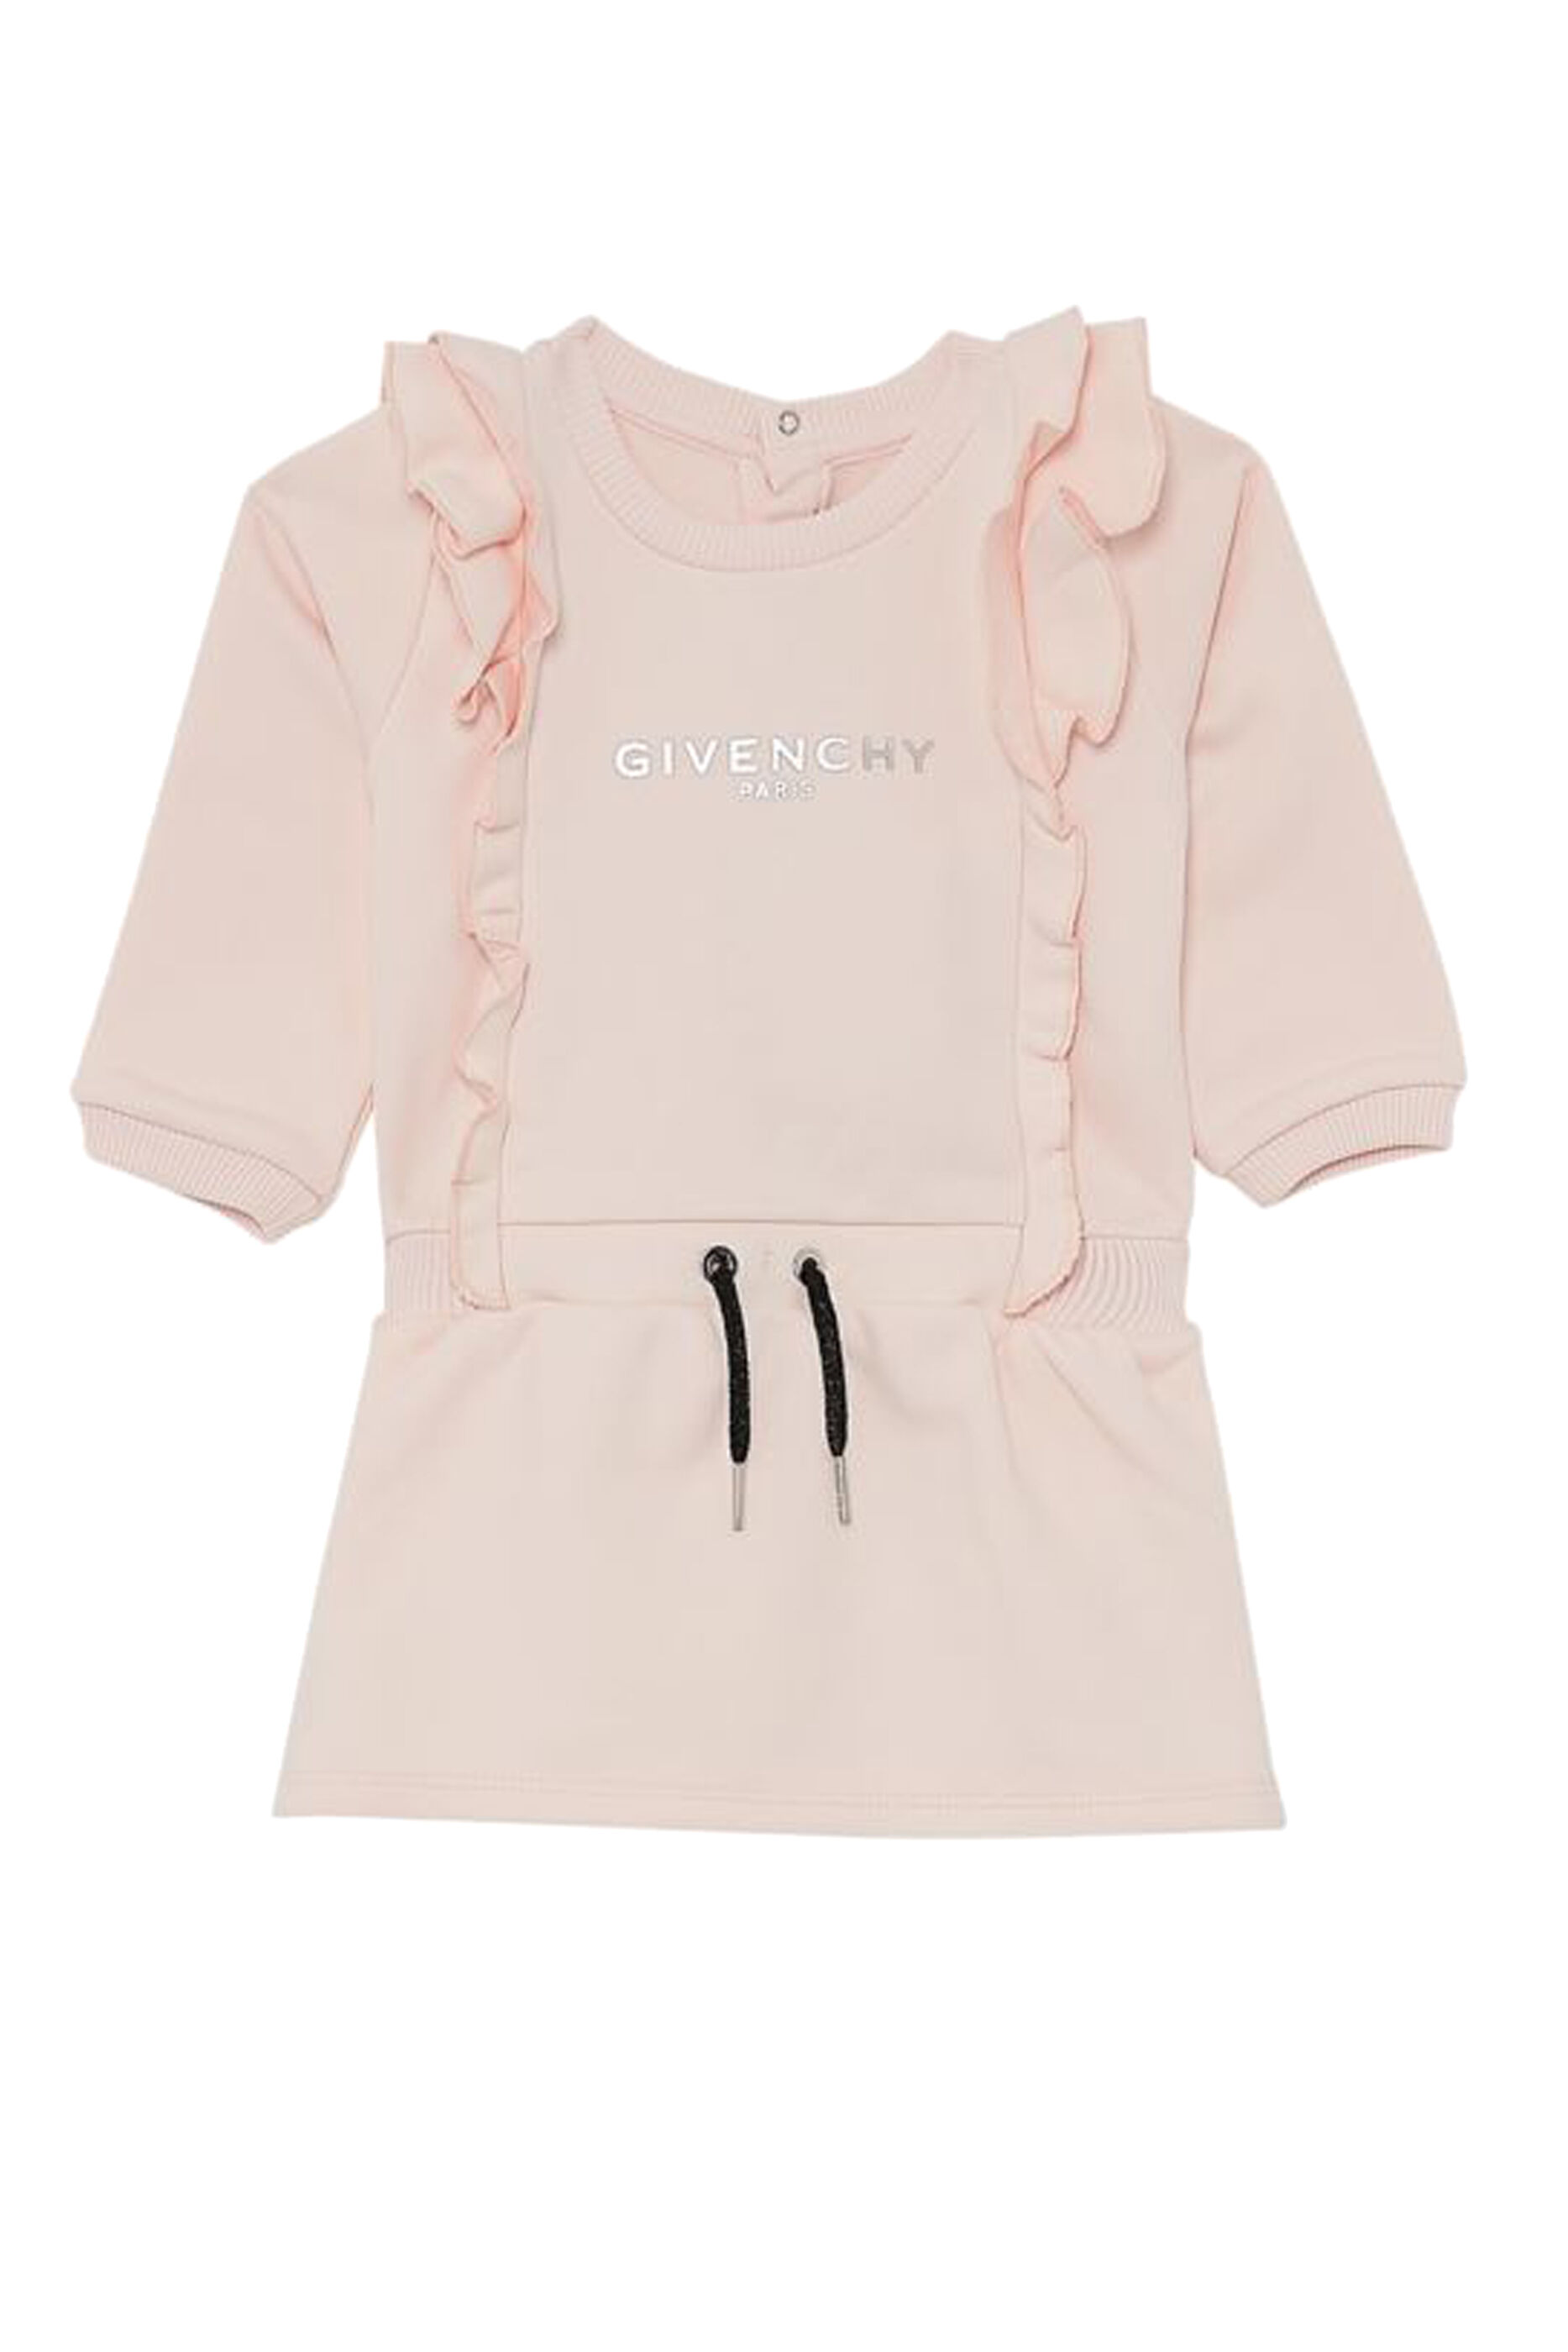 Buy Givenchy Logo Print Dress - Kids 